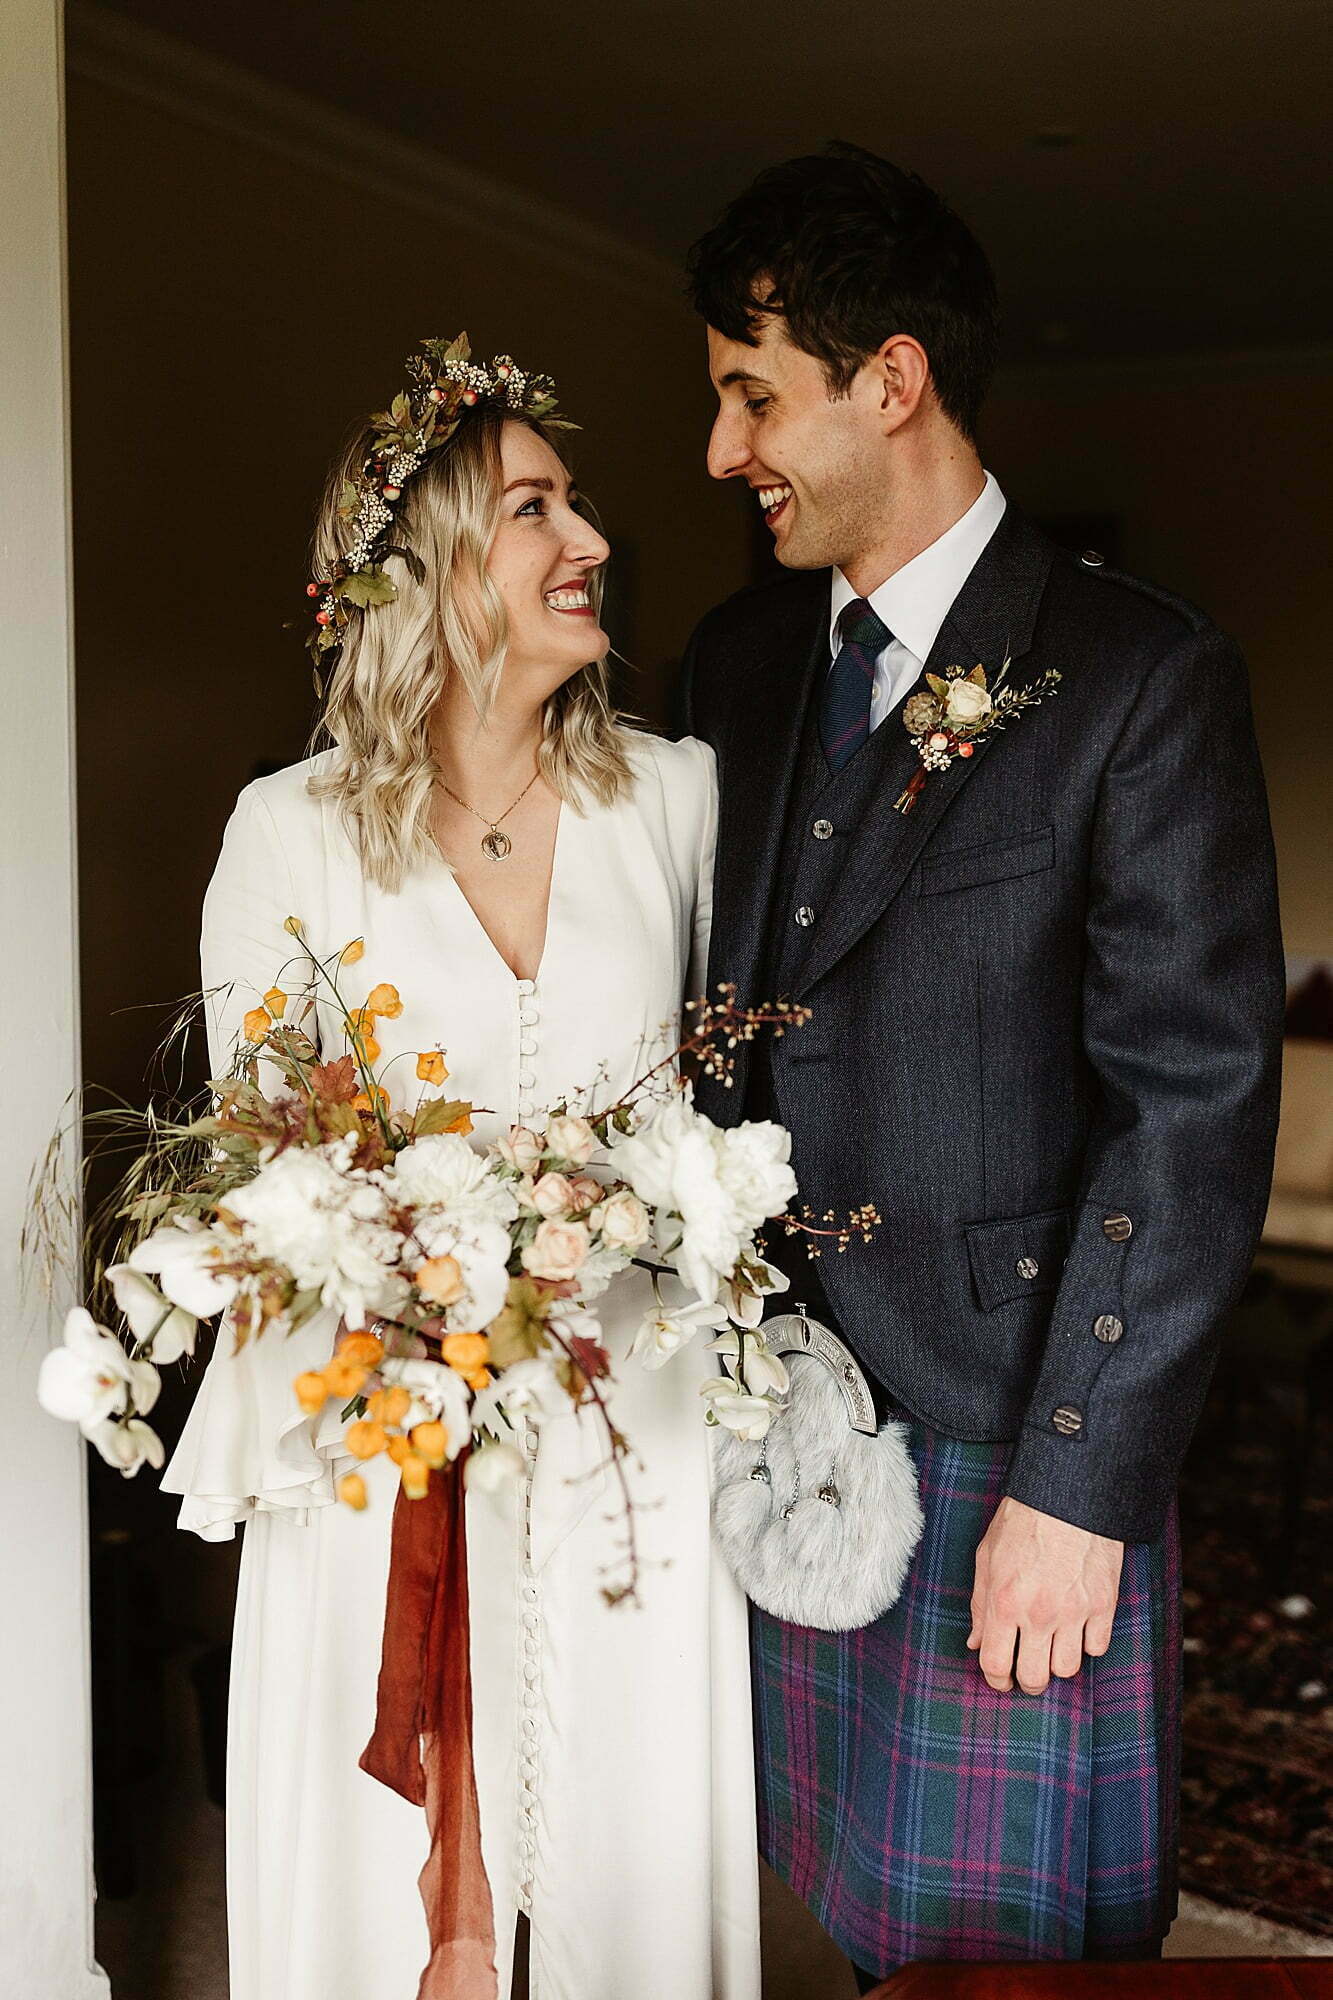 bride and groom monsoon wedding dress wild flower workshop flowers bouquet macgregor and macduff kilt